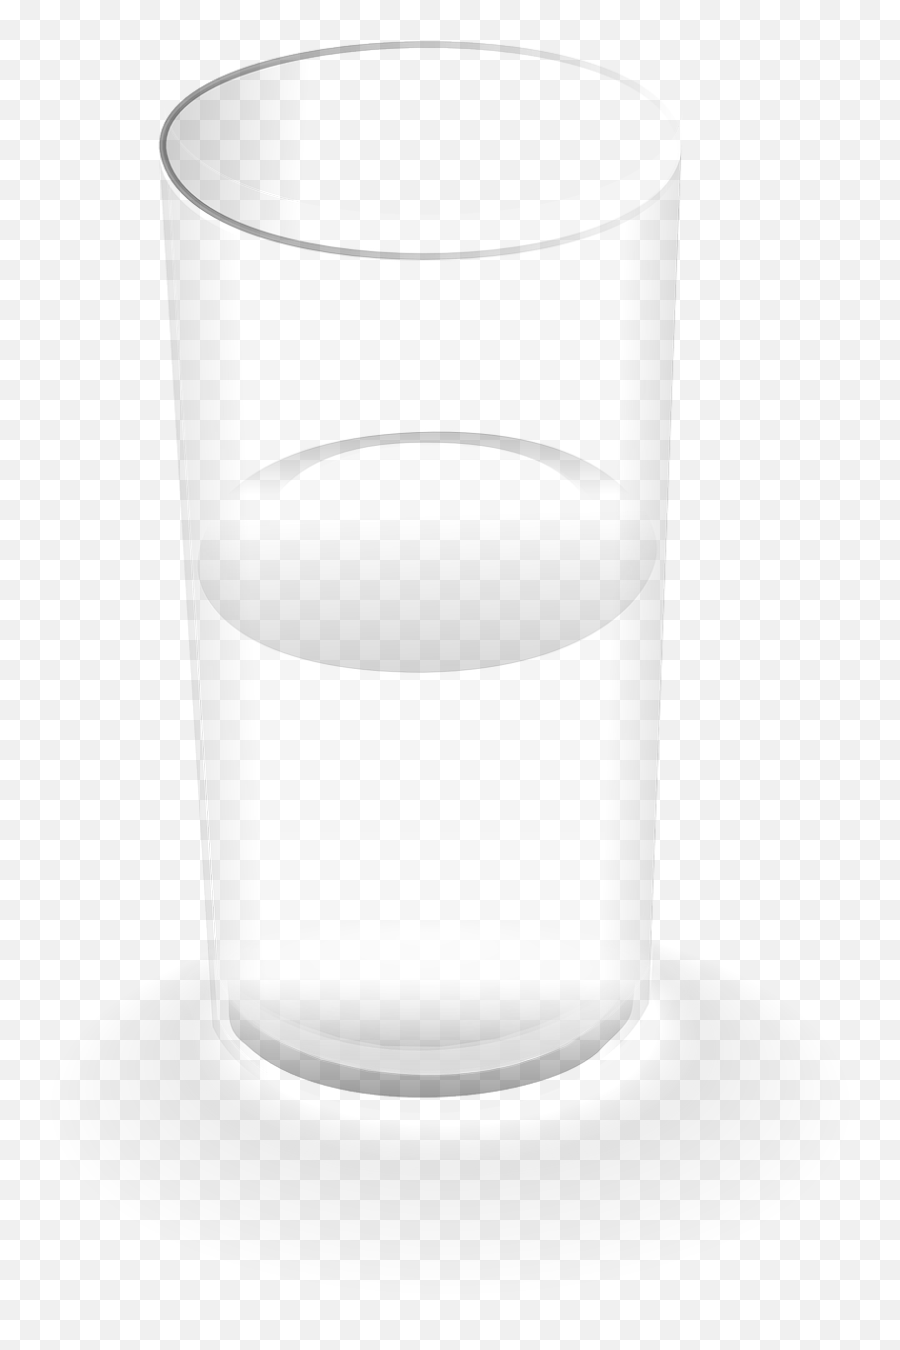 Download Free Photo Of Watercupbeveragesdrinkingdrink - Water Emoji,Glass Of Water Clipart